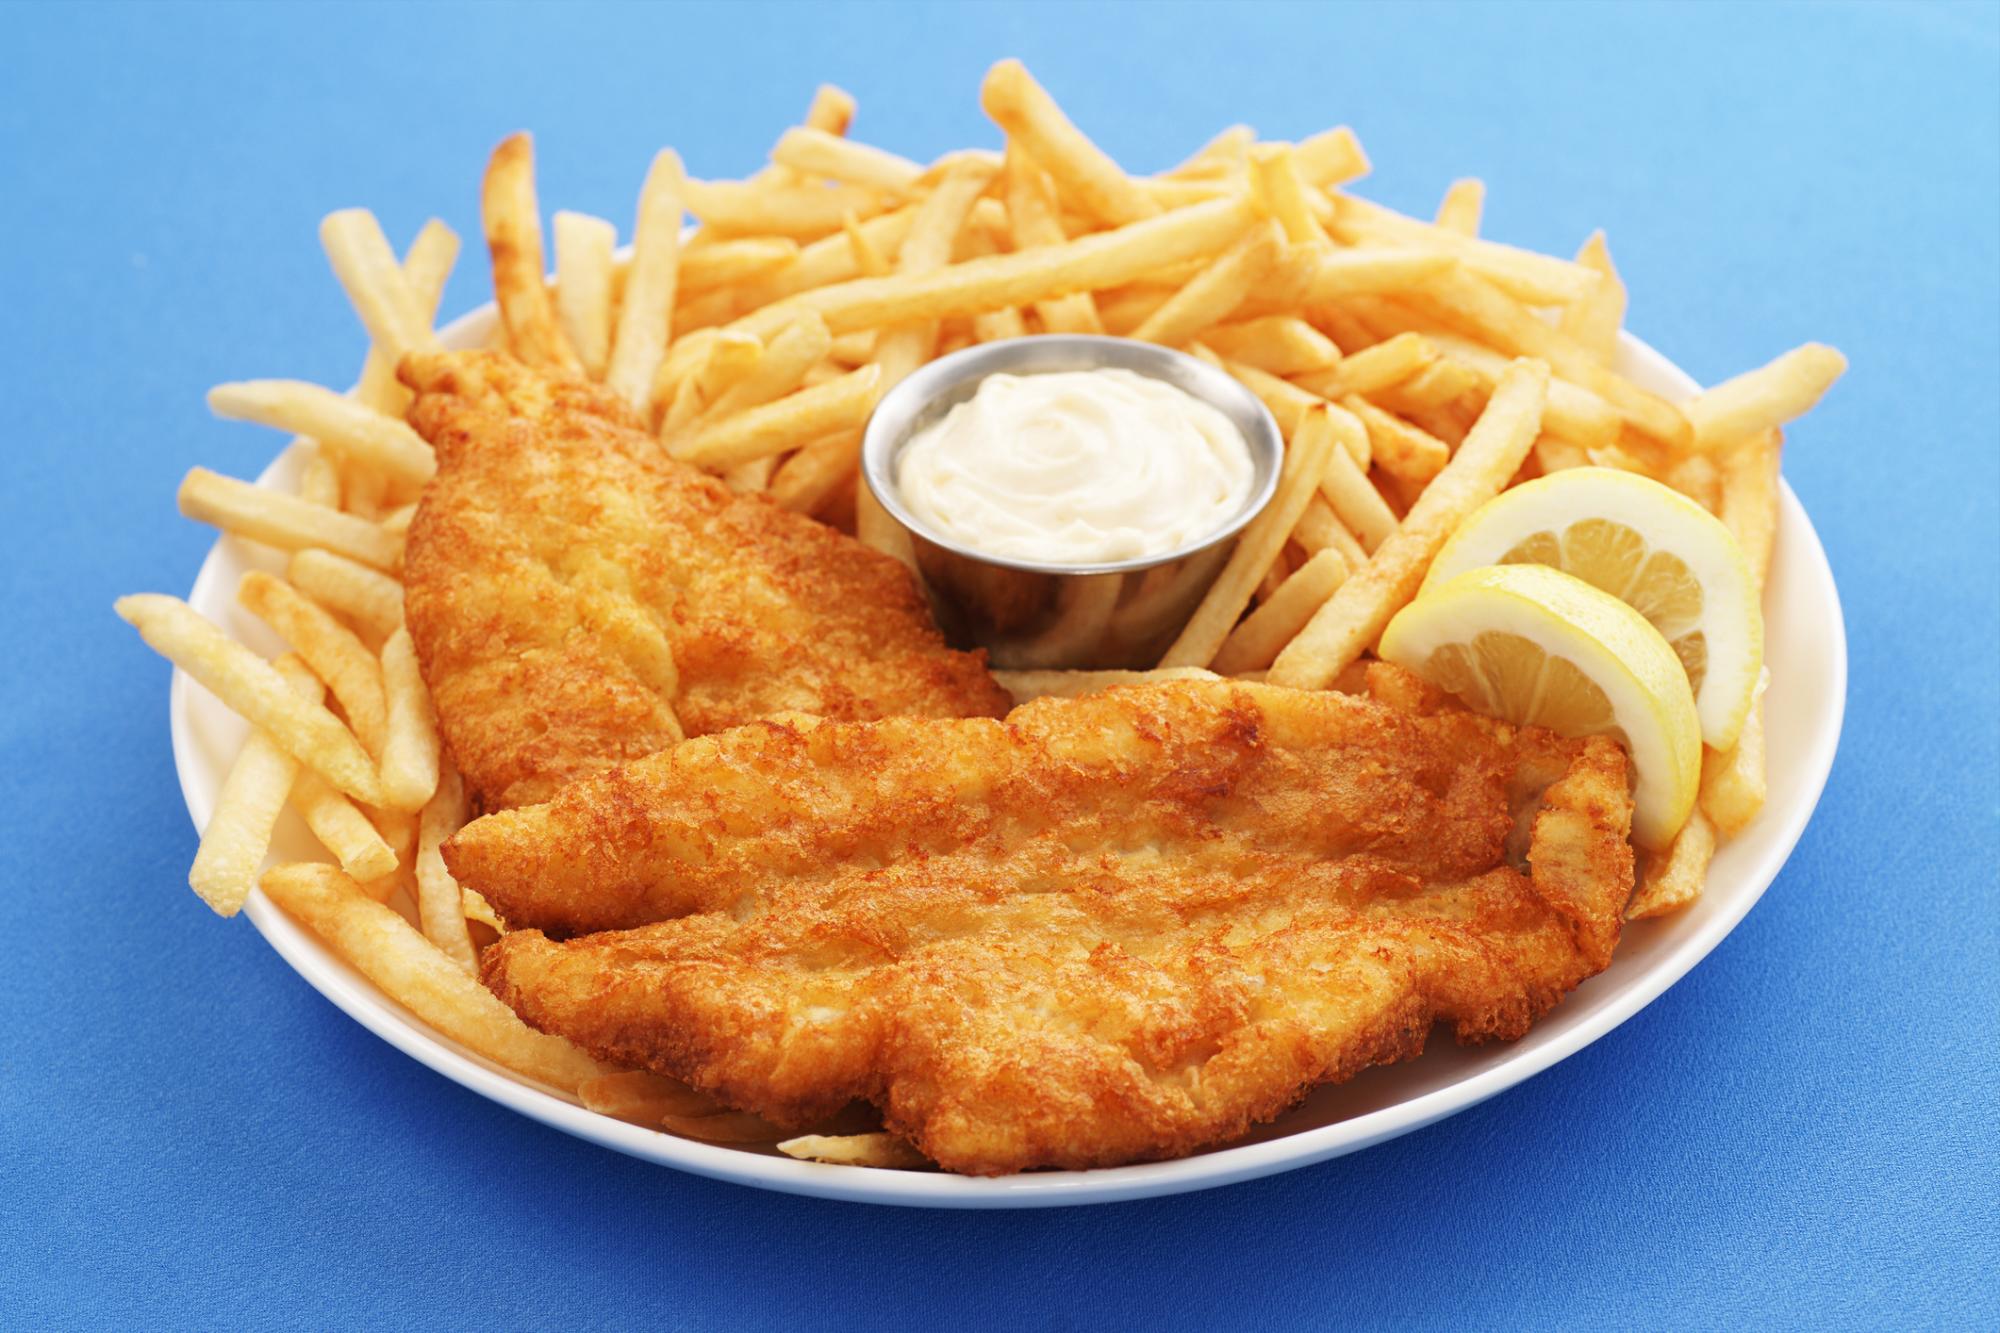 “Fish and chips”, la propuesta inglesa de la técnica.